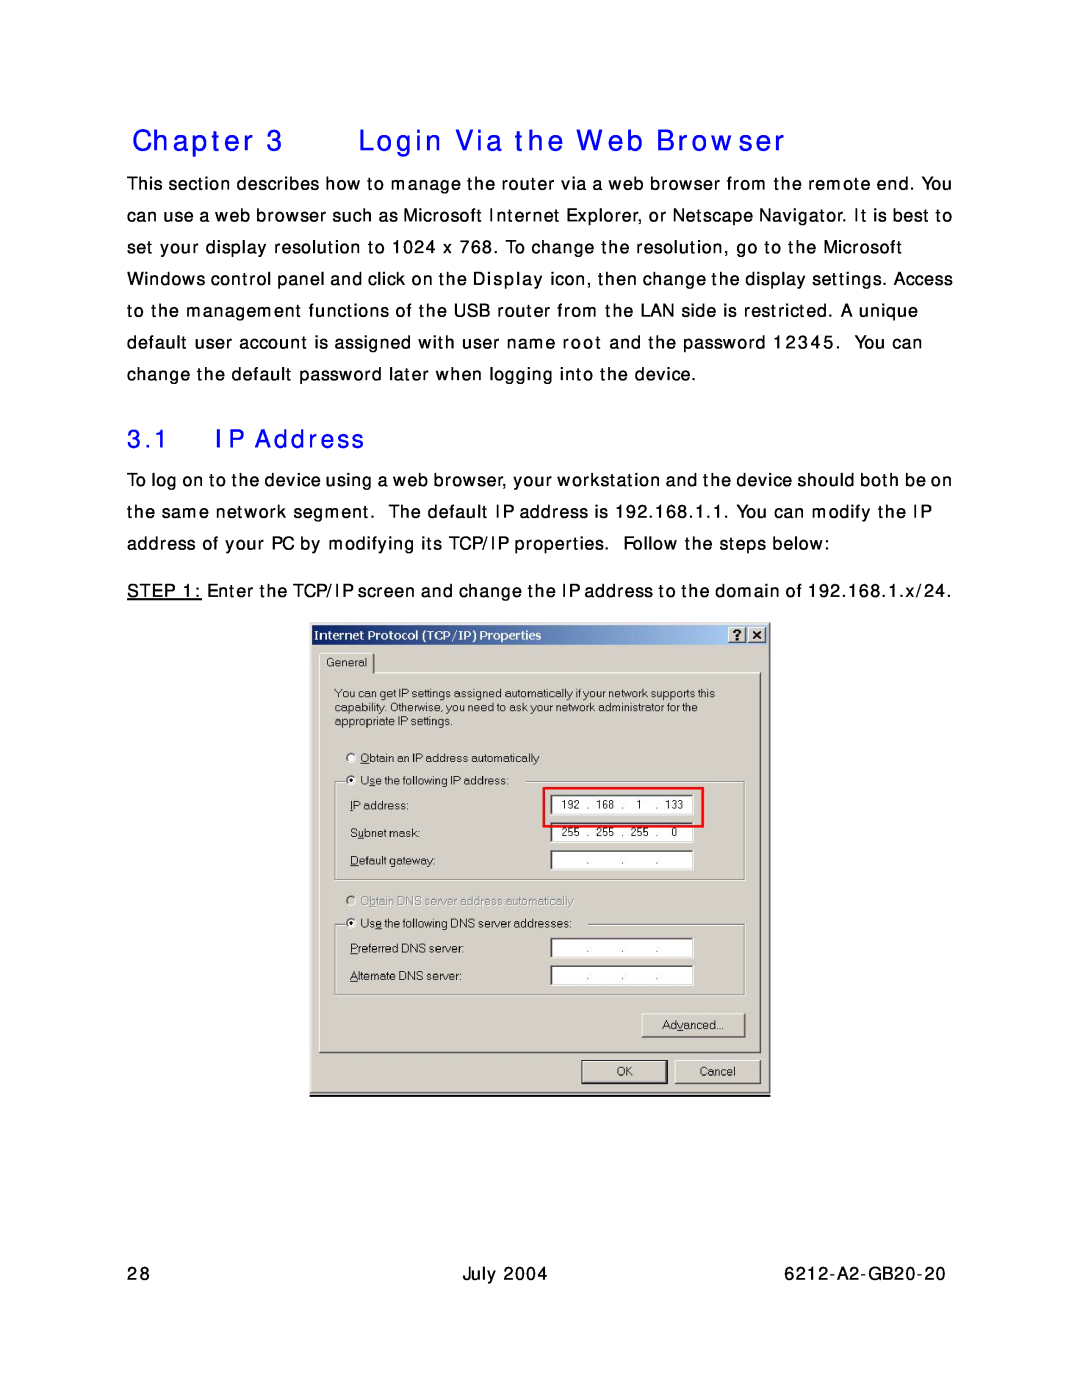 Paradyne 6212 manual Login Via the Web Browser, IP Address 